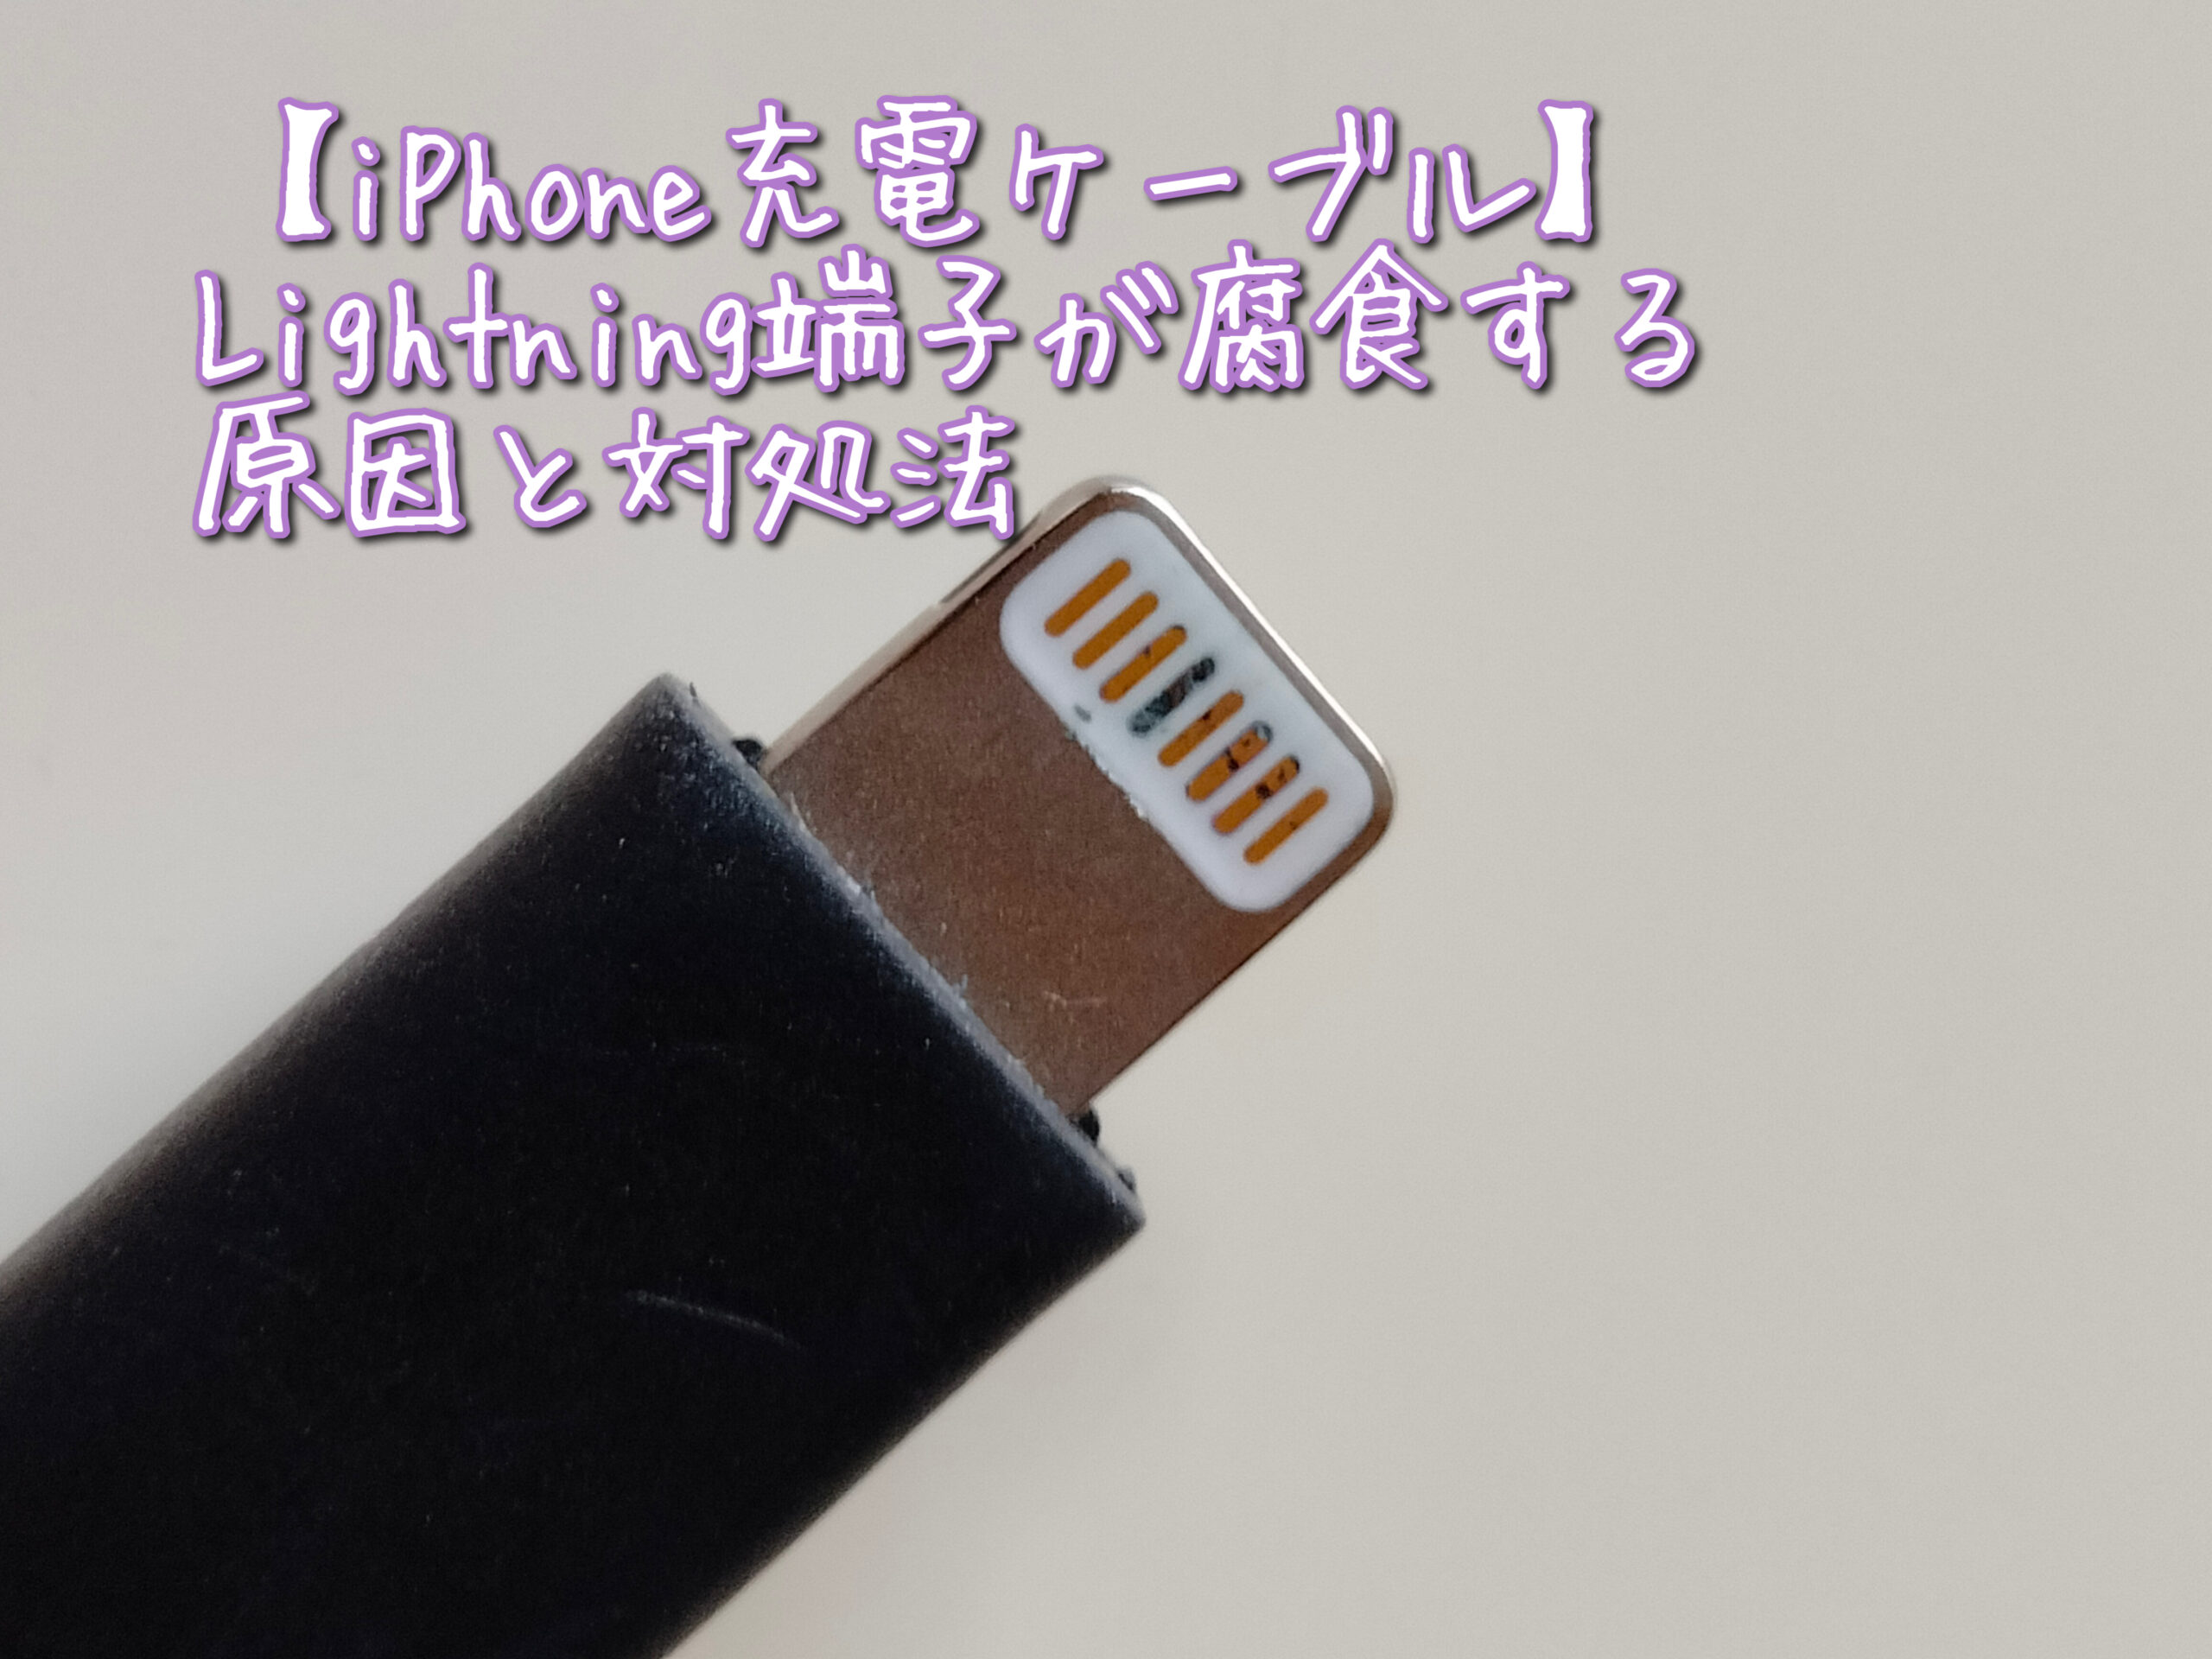 iPhone 充電 Lightning コード